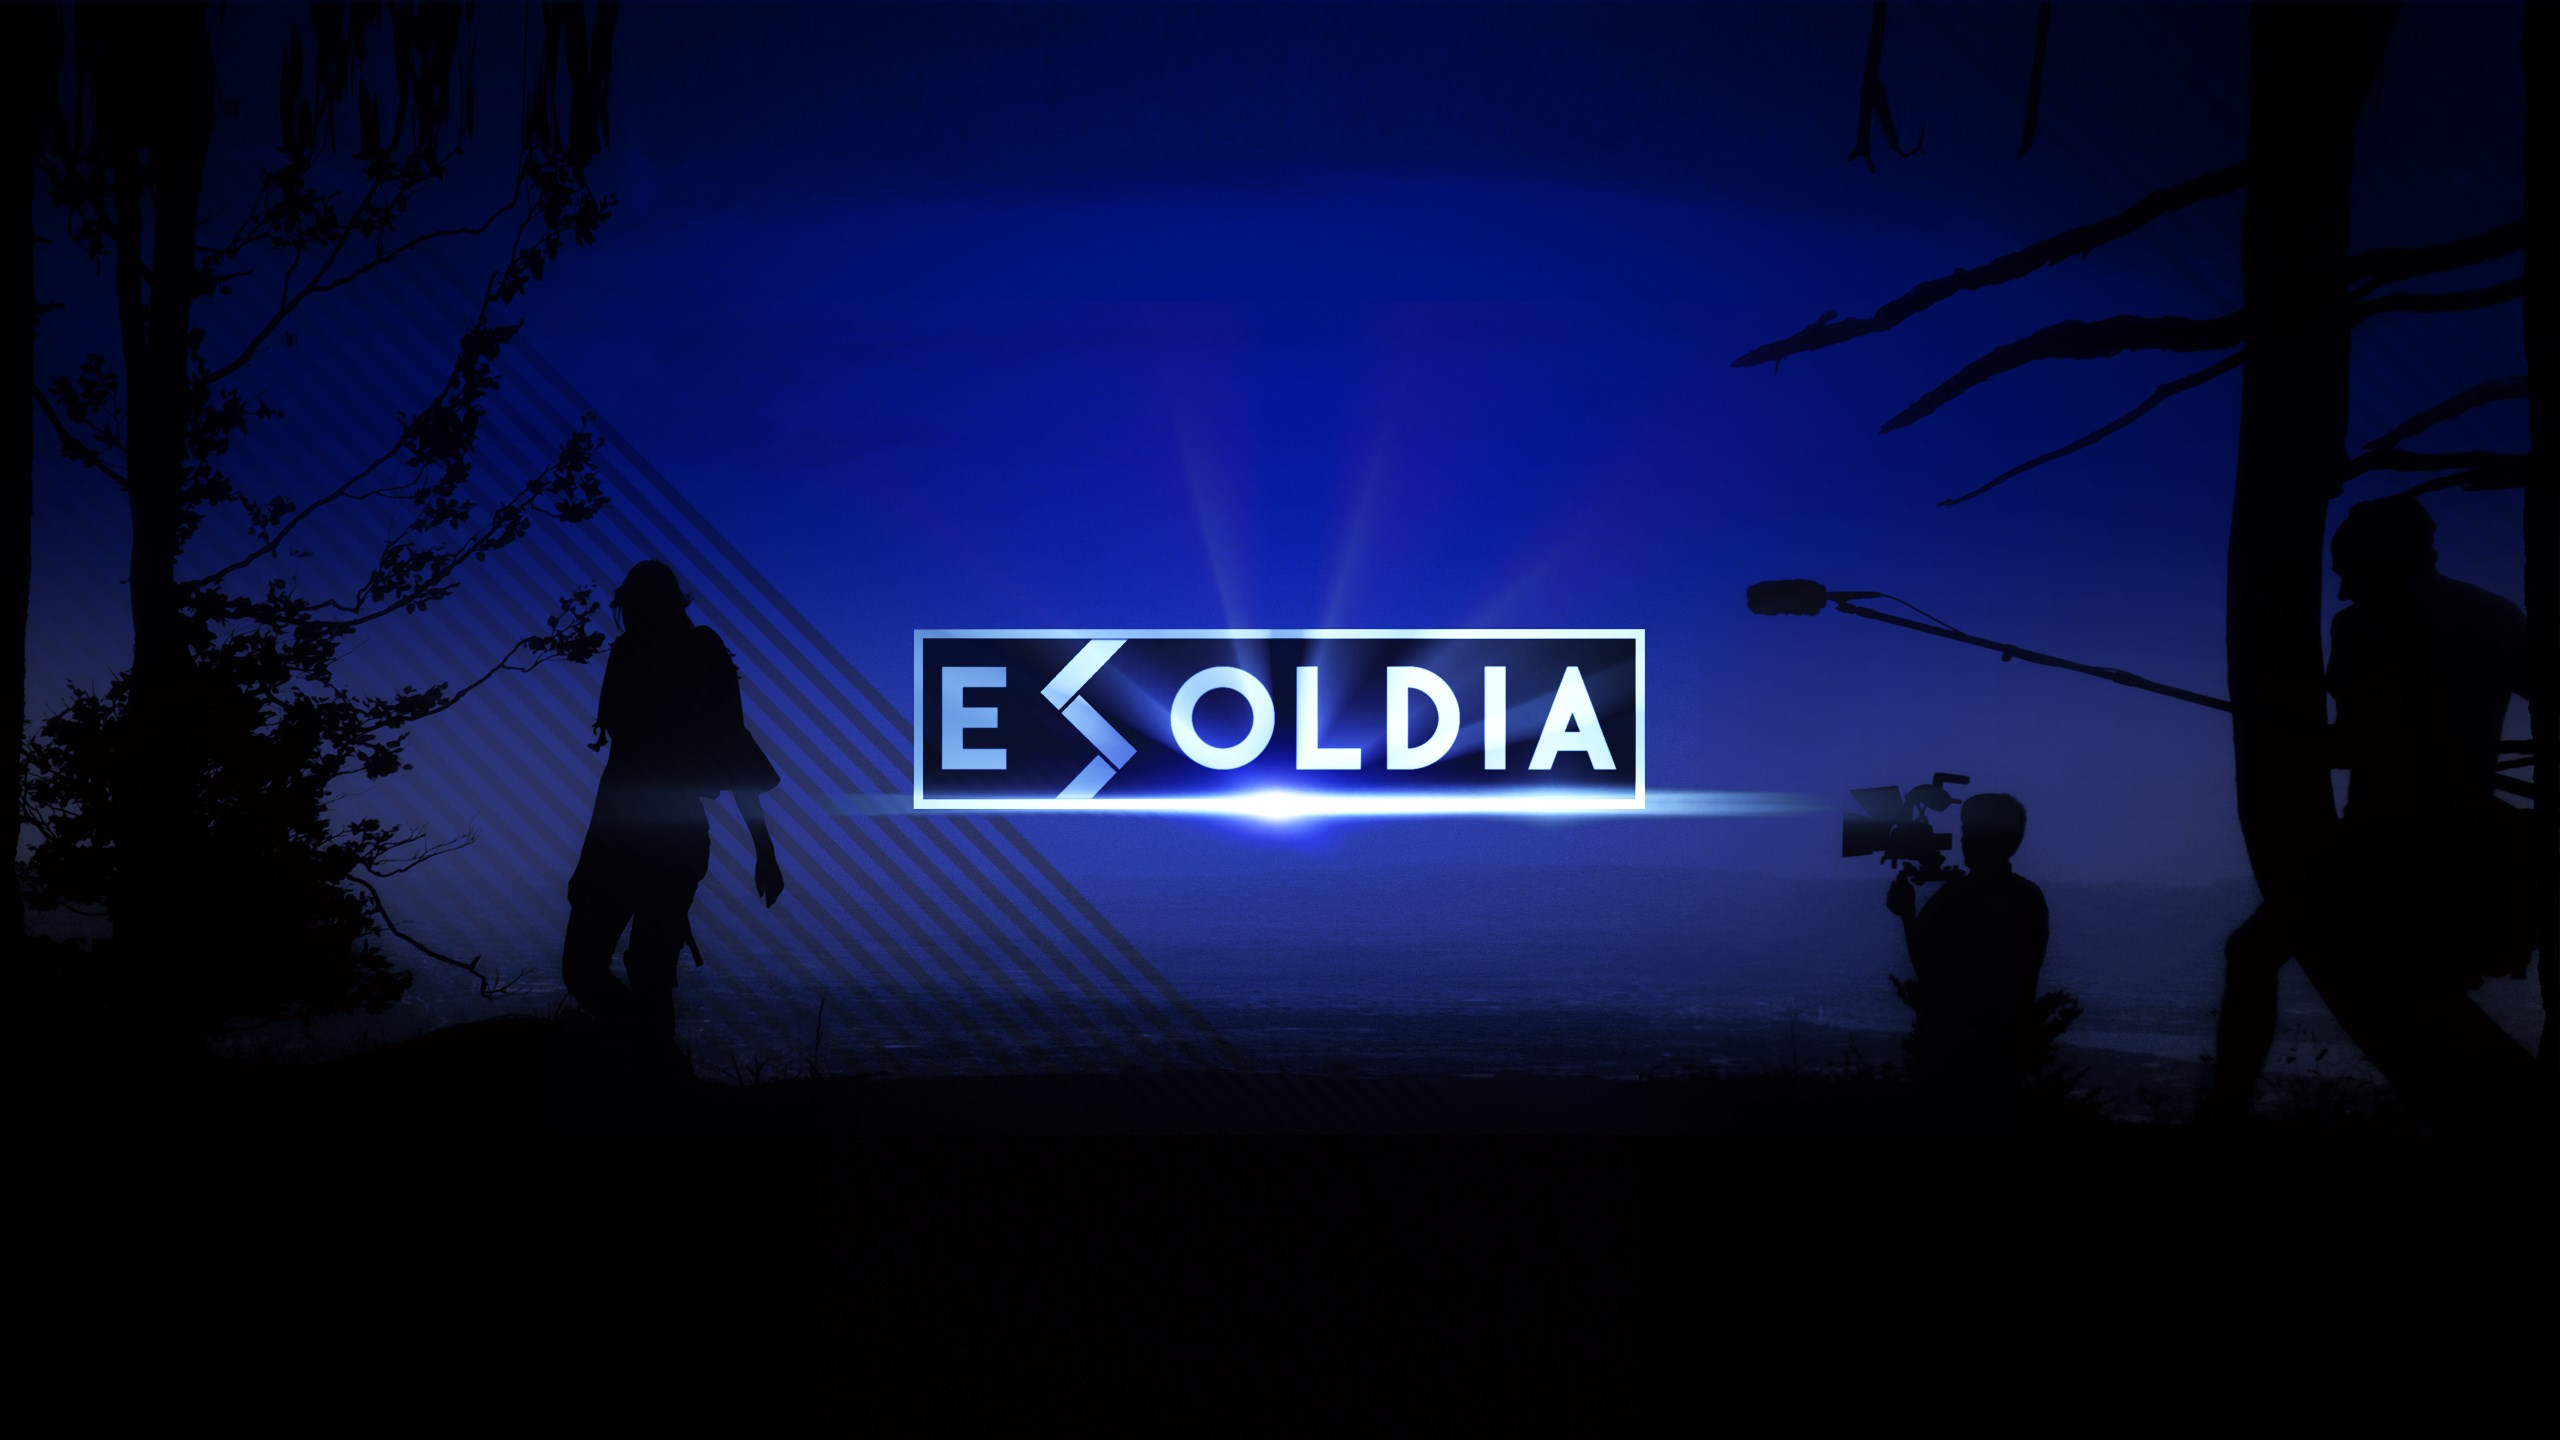 ESOLDIA Production